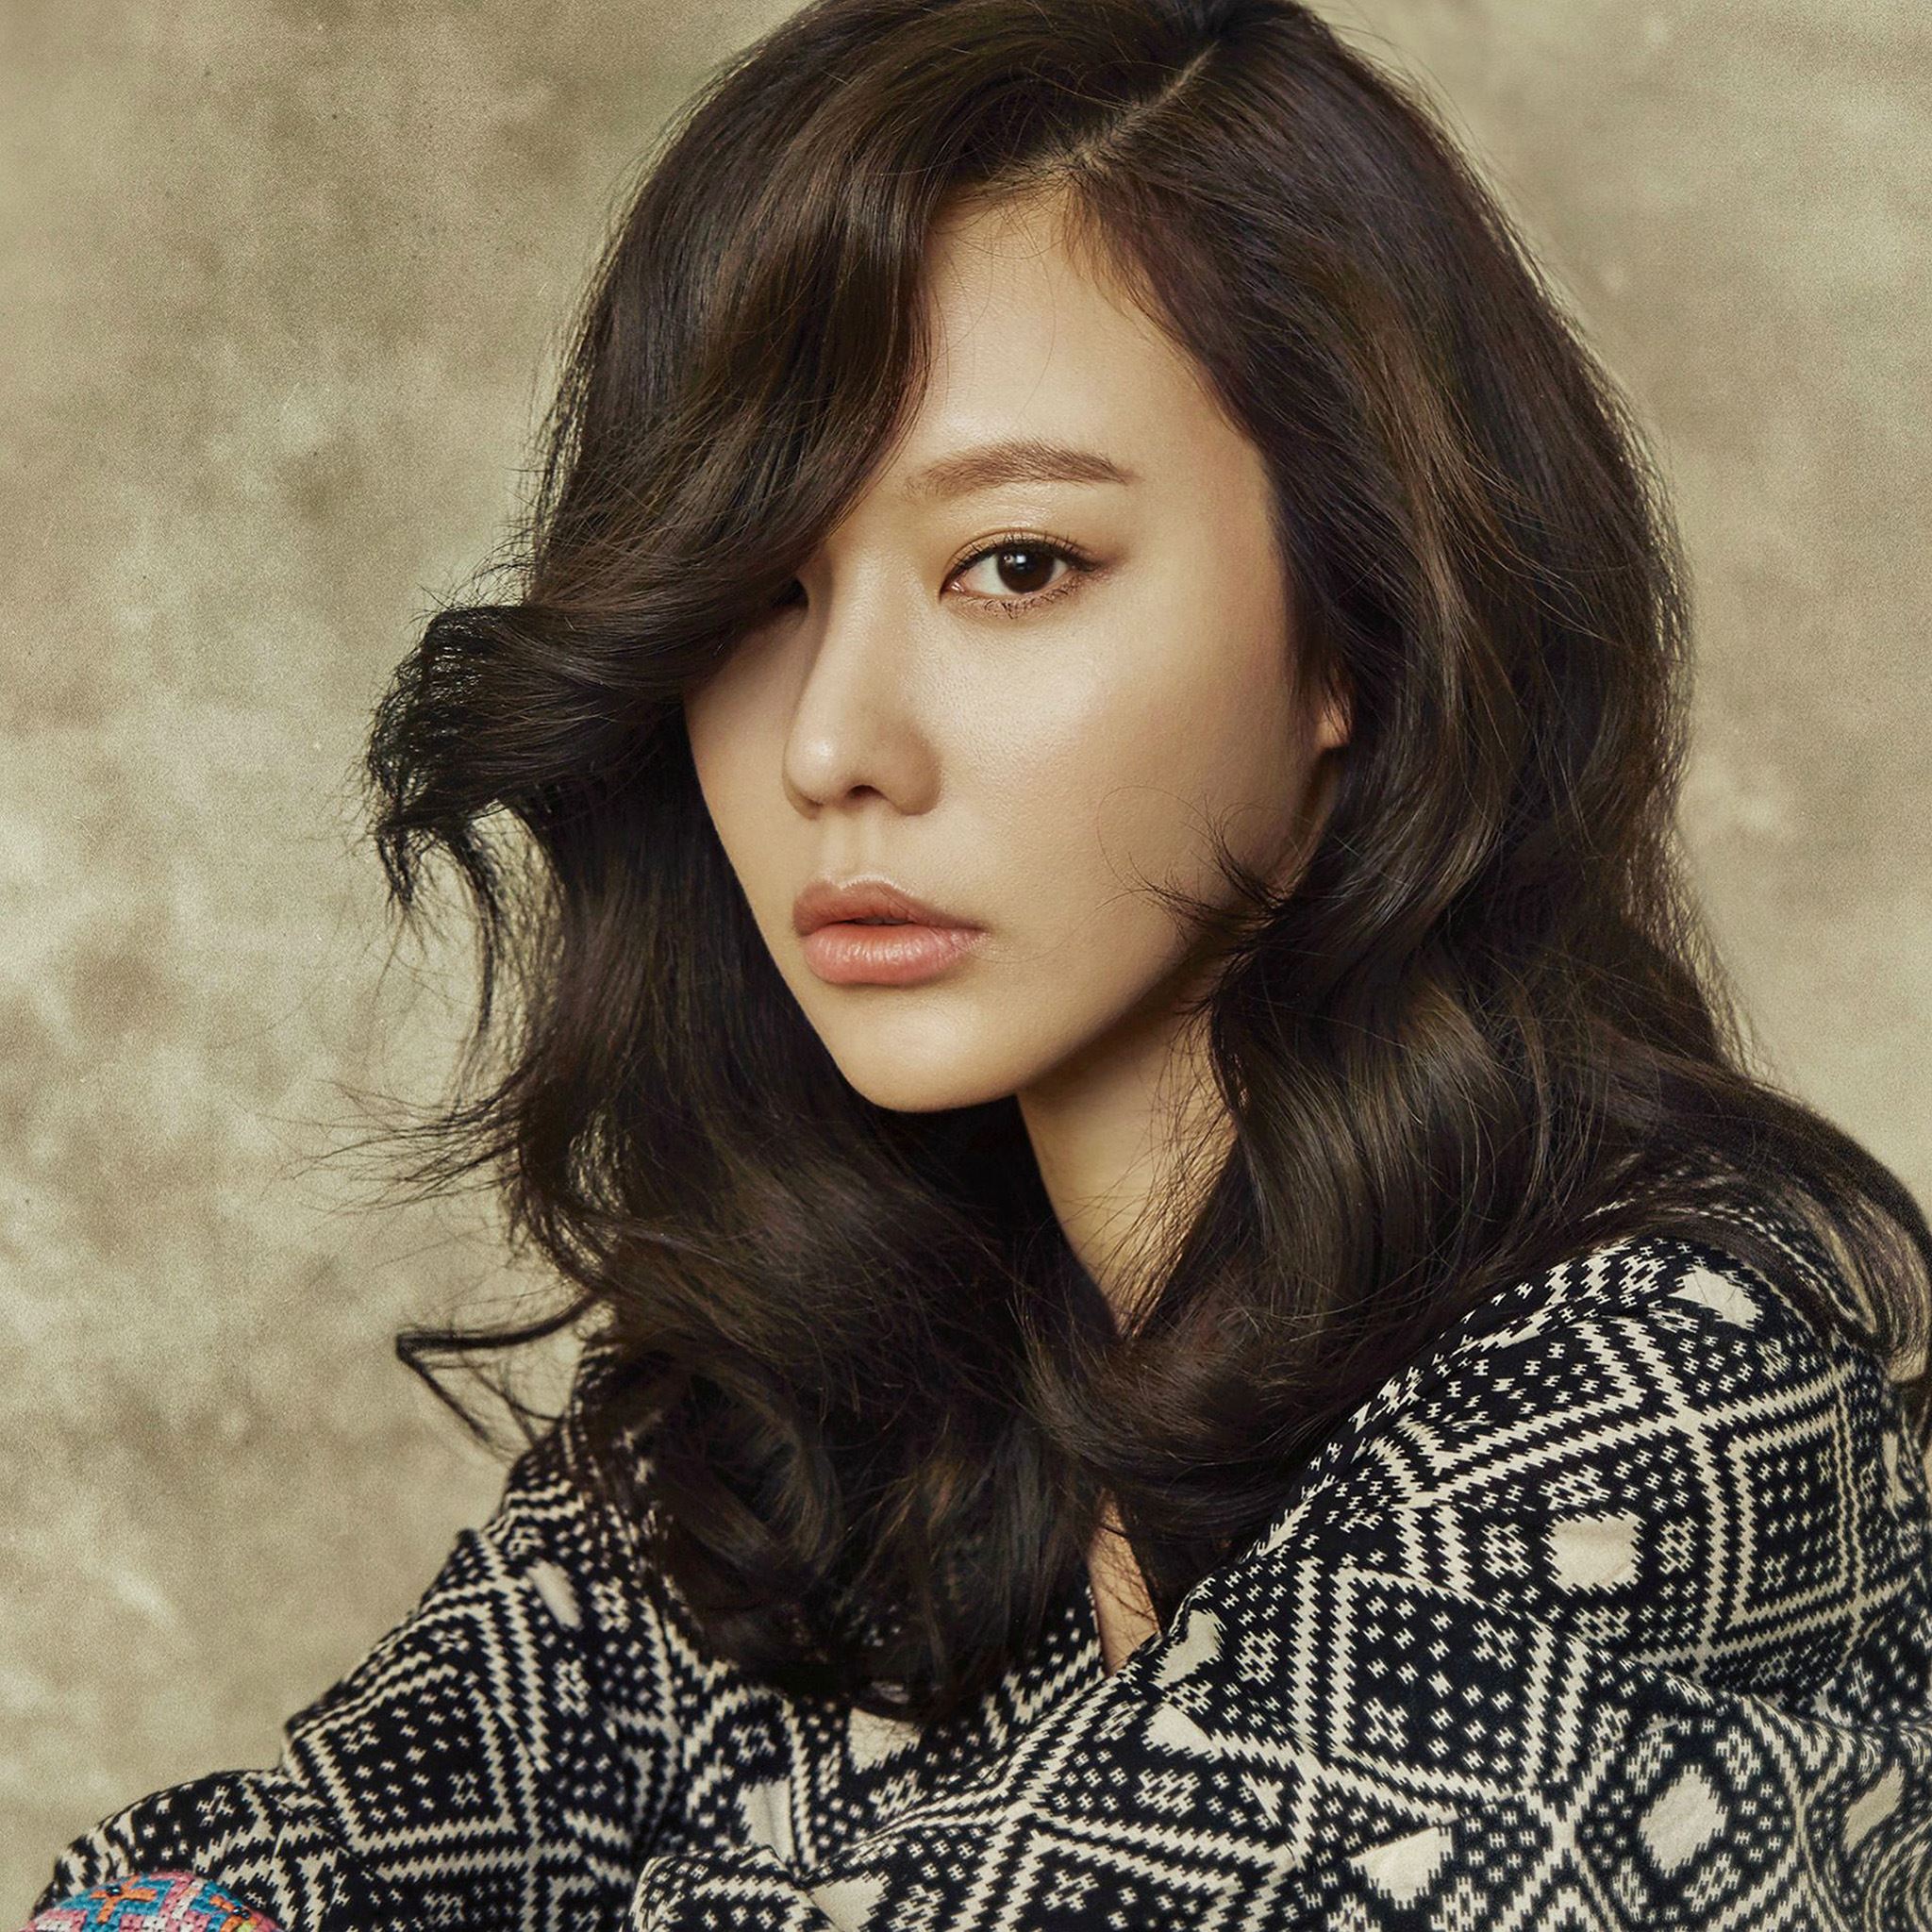 Kpop Girl Film Actress Kim A Joong Cute iPad Air wallpaper 